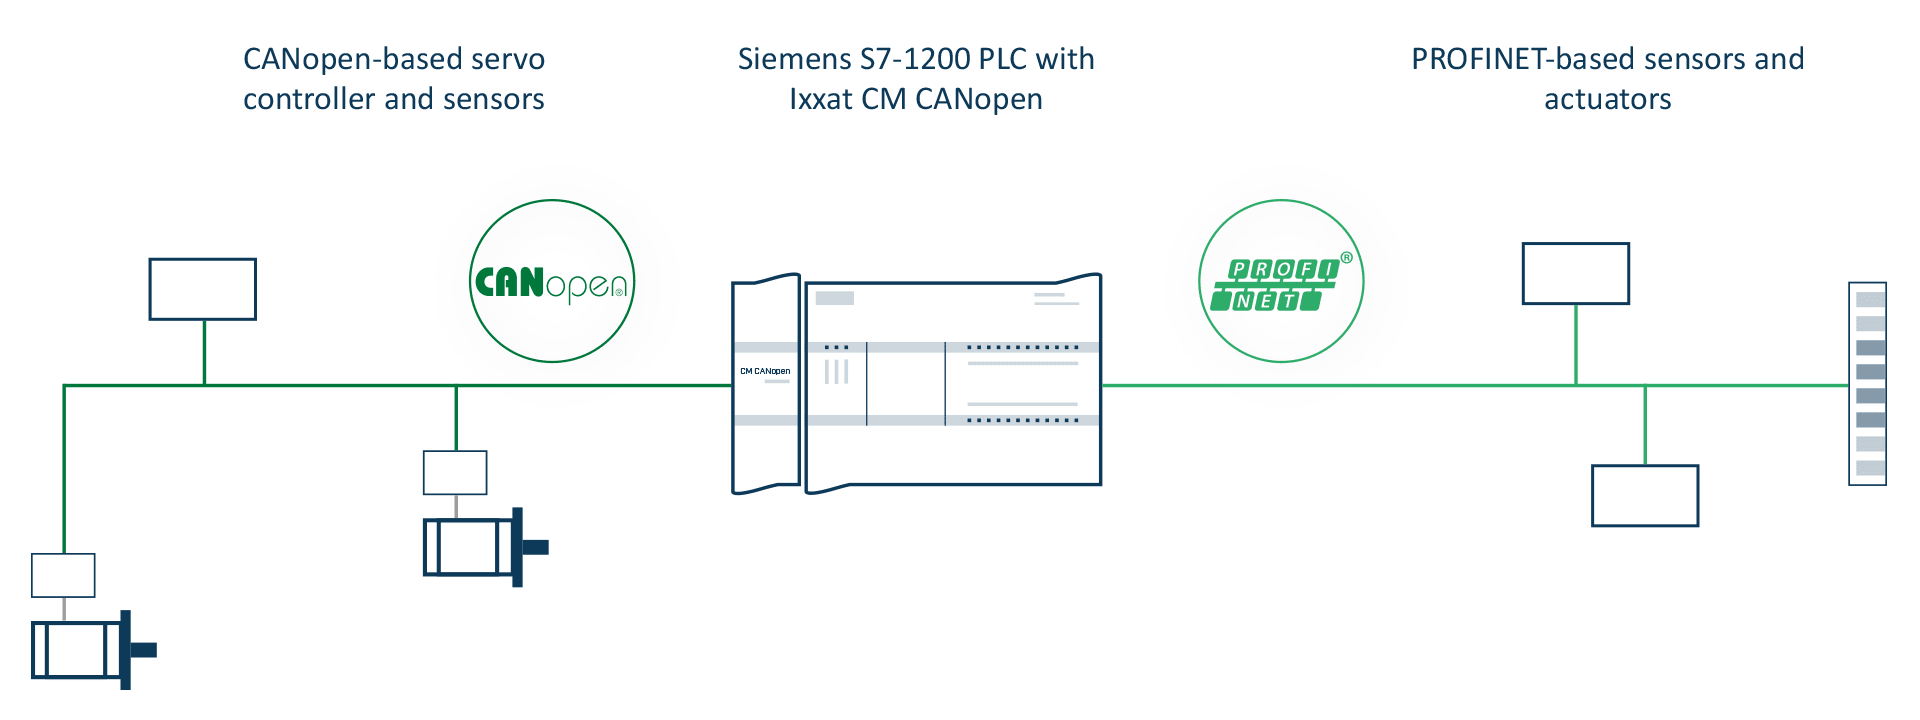 CANopen as a backbone network in a Siemens PLC environment